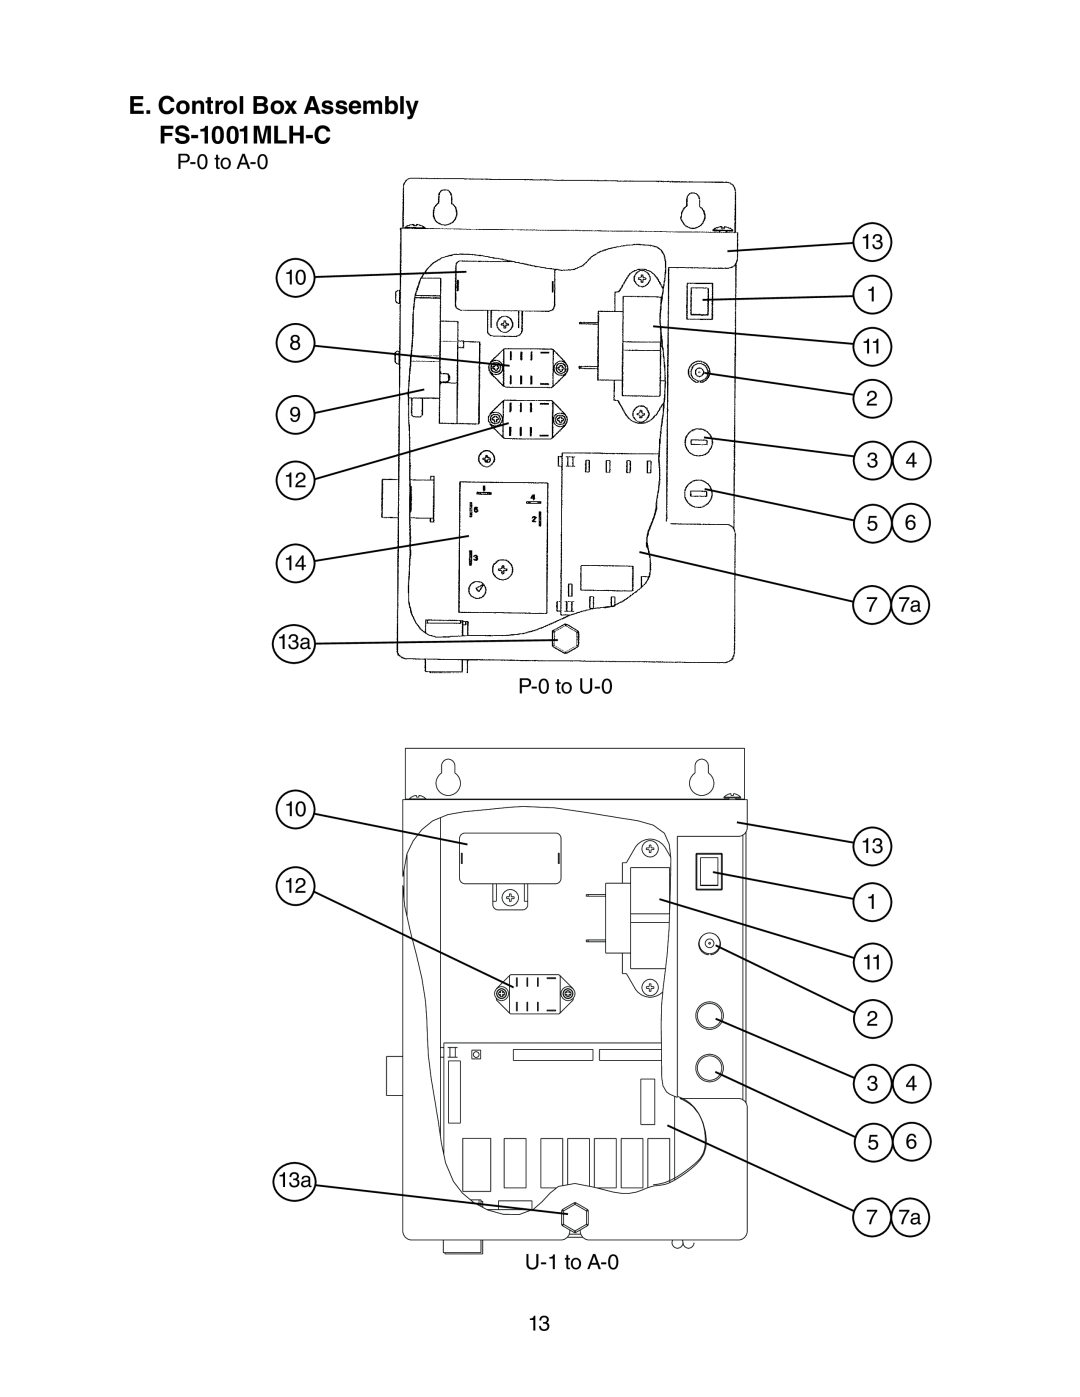 Hoshizaki manual E. Control Box Assembly FS-1001MLH-C 